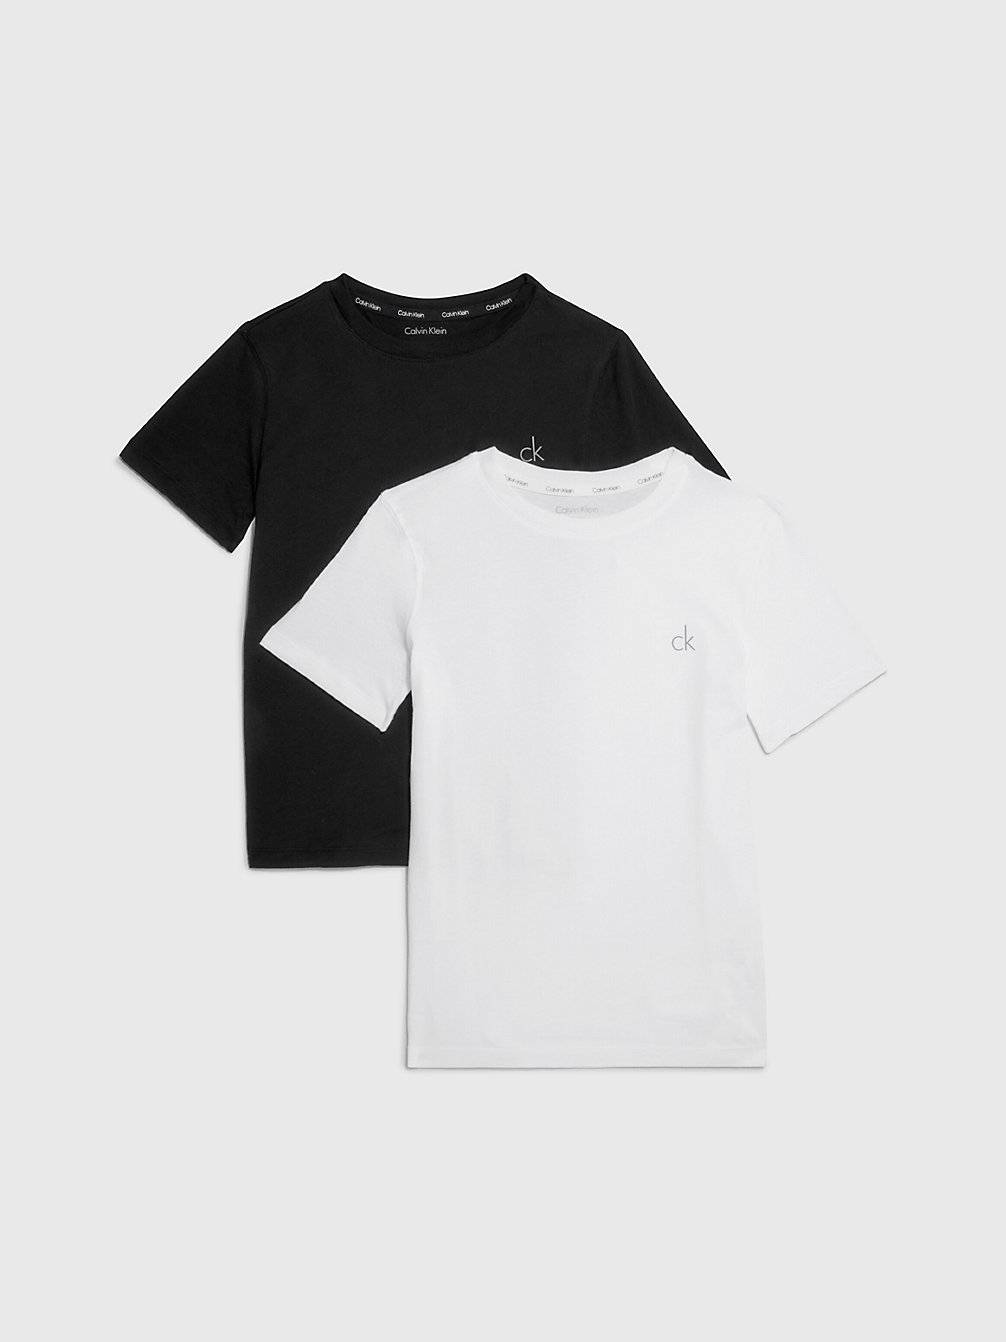 WHITE / BLACK > Комплект домашних футболок для мальчиков 2 шт. > undefined boys - Calvin Klein